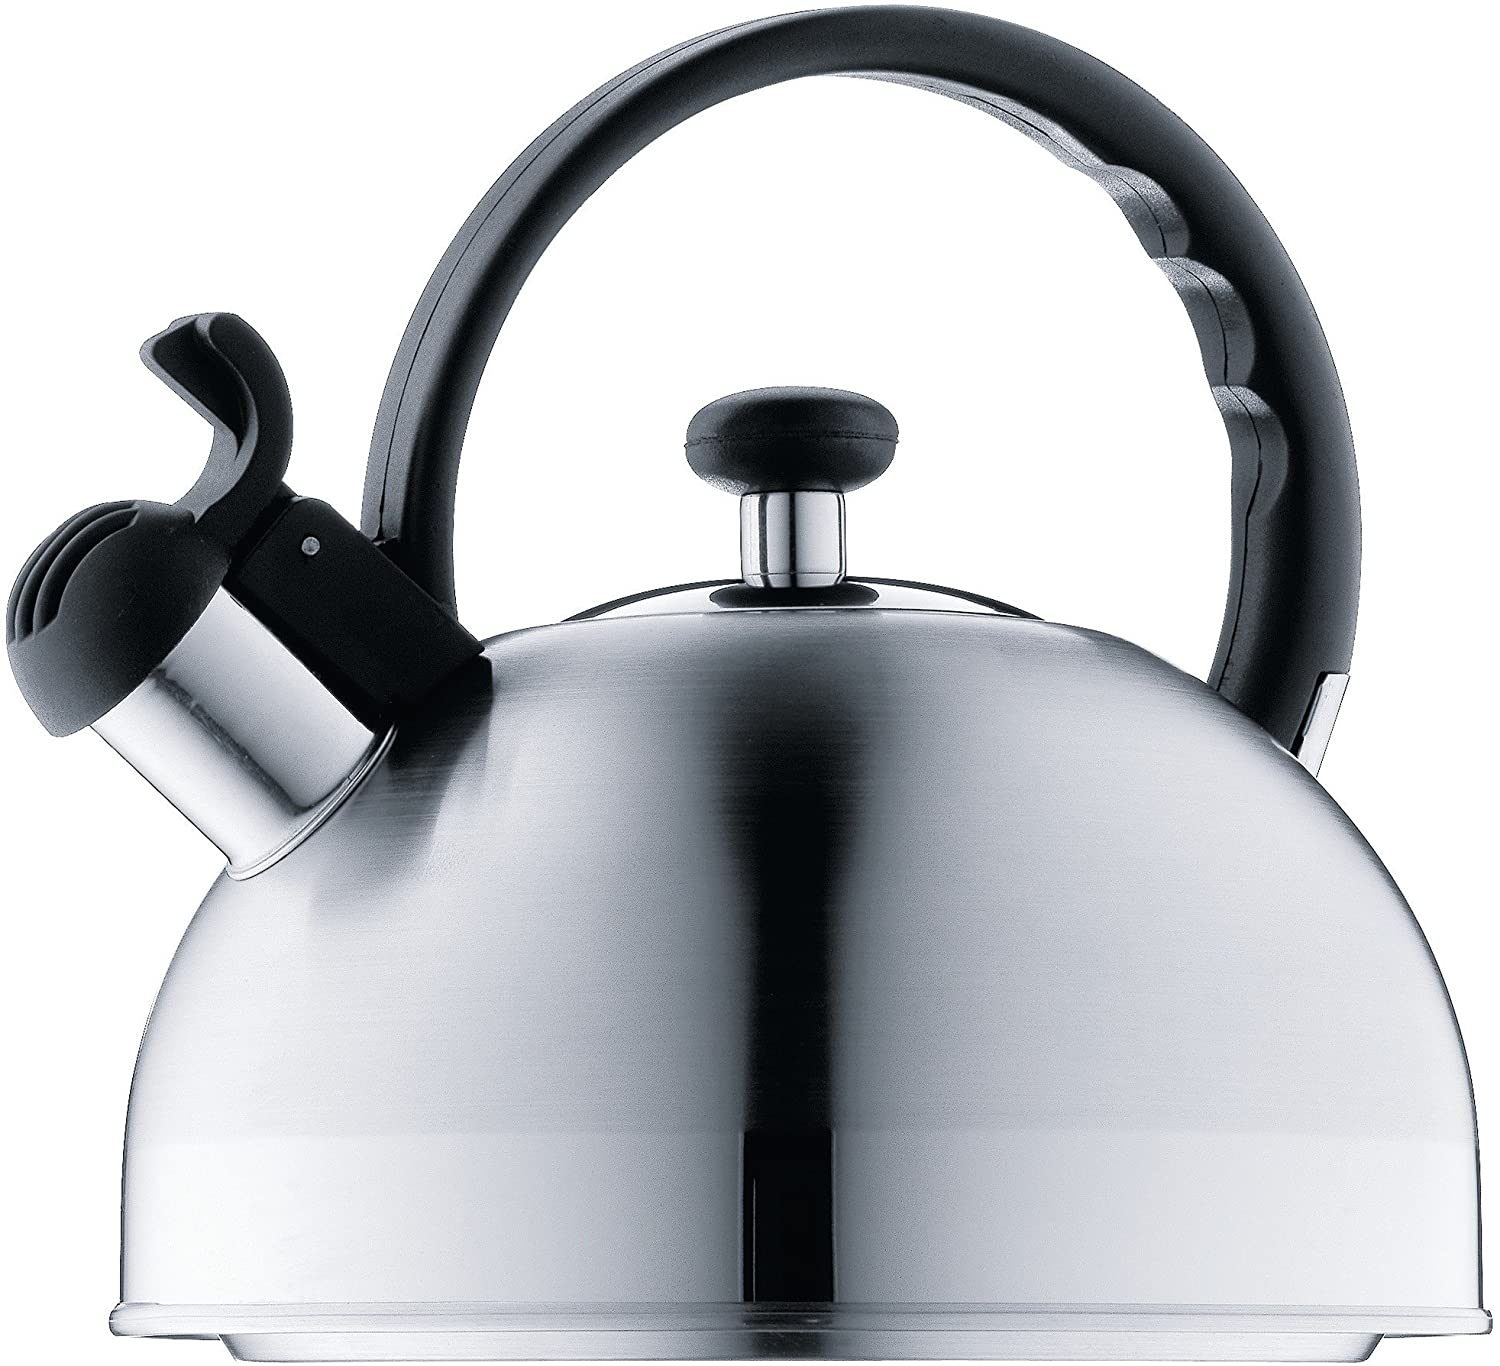 WMF ORBIT flute kettle 1.5 L pipe kettle with flute, tea kettle, kettle, Cromargan stainless steel, induction